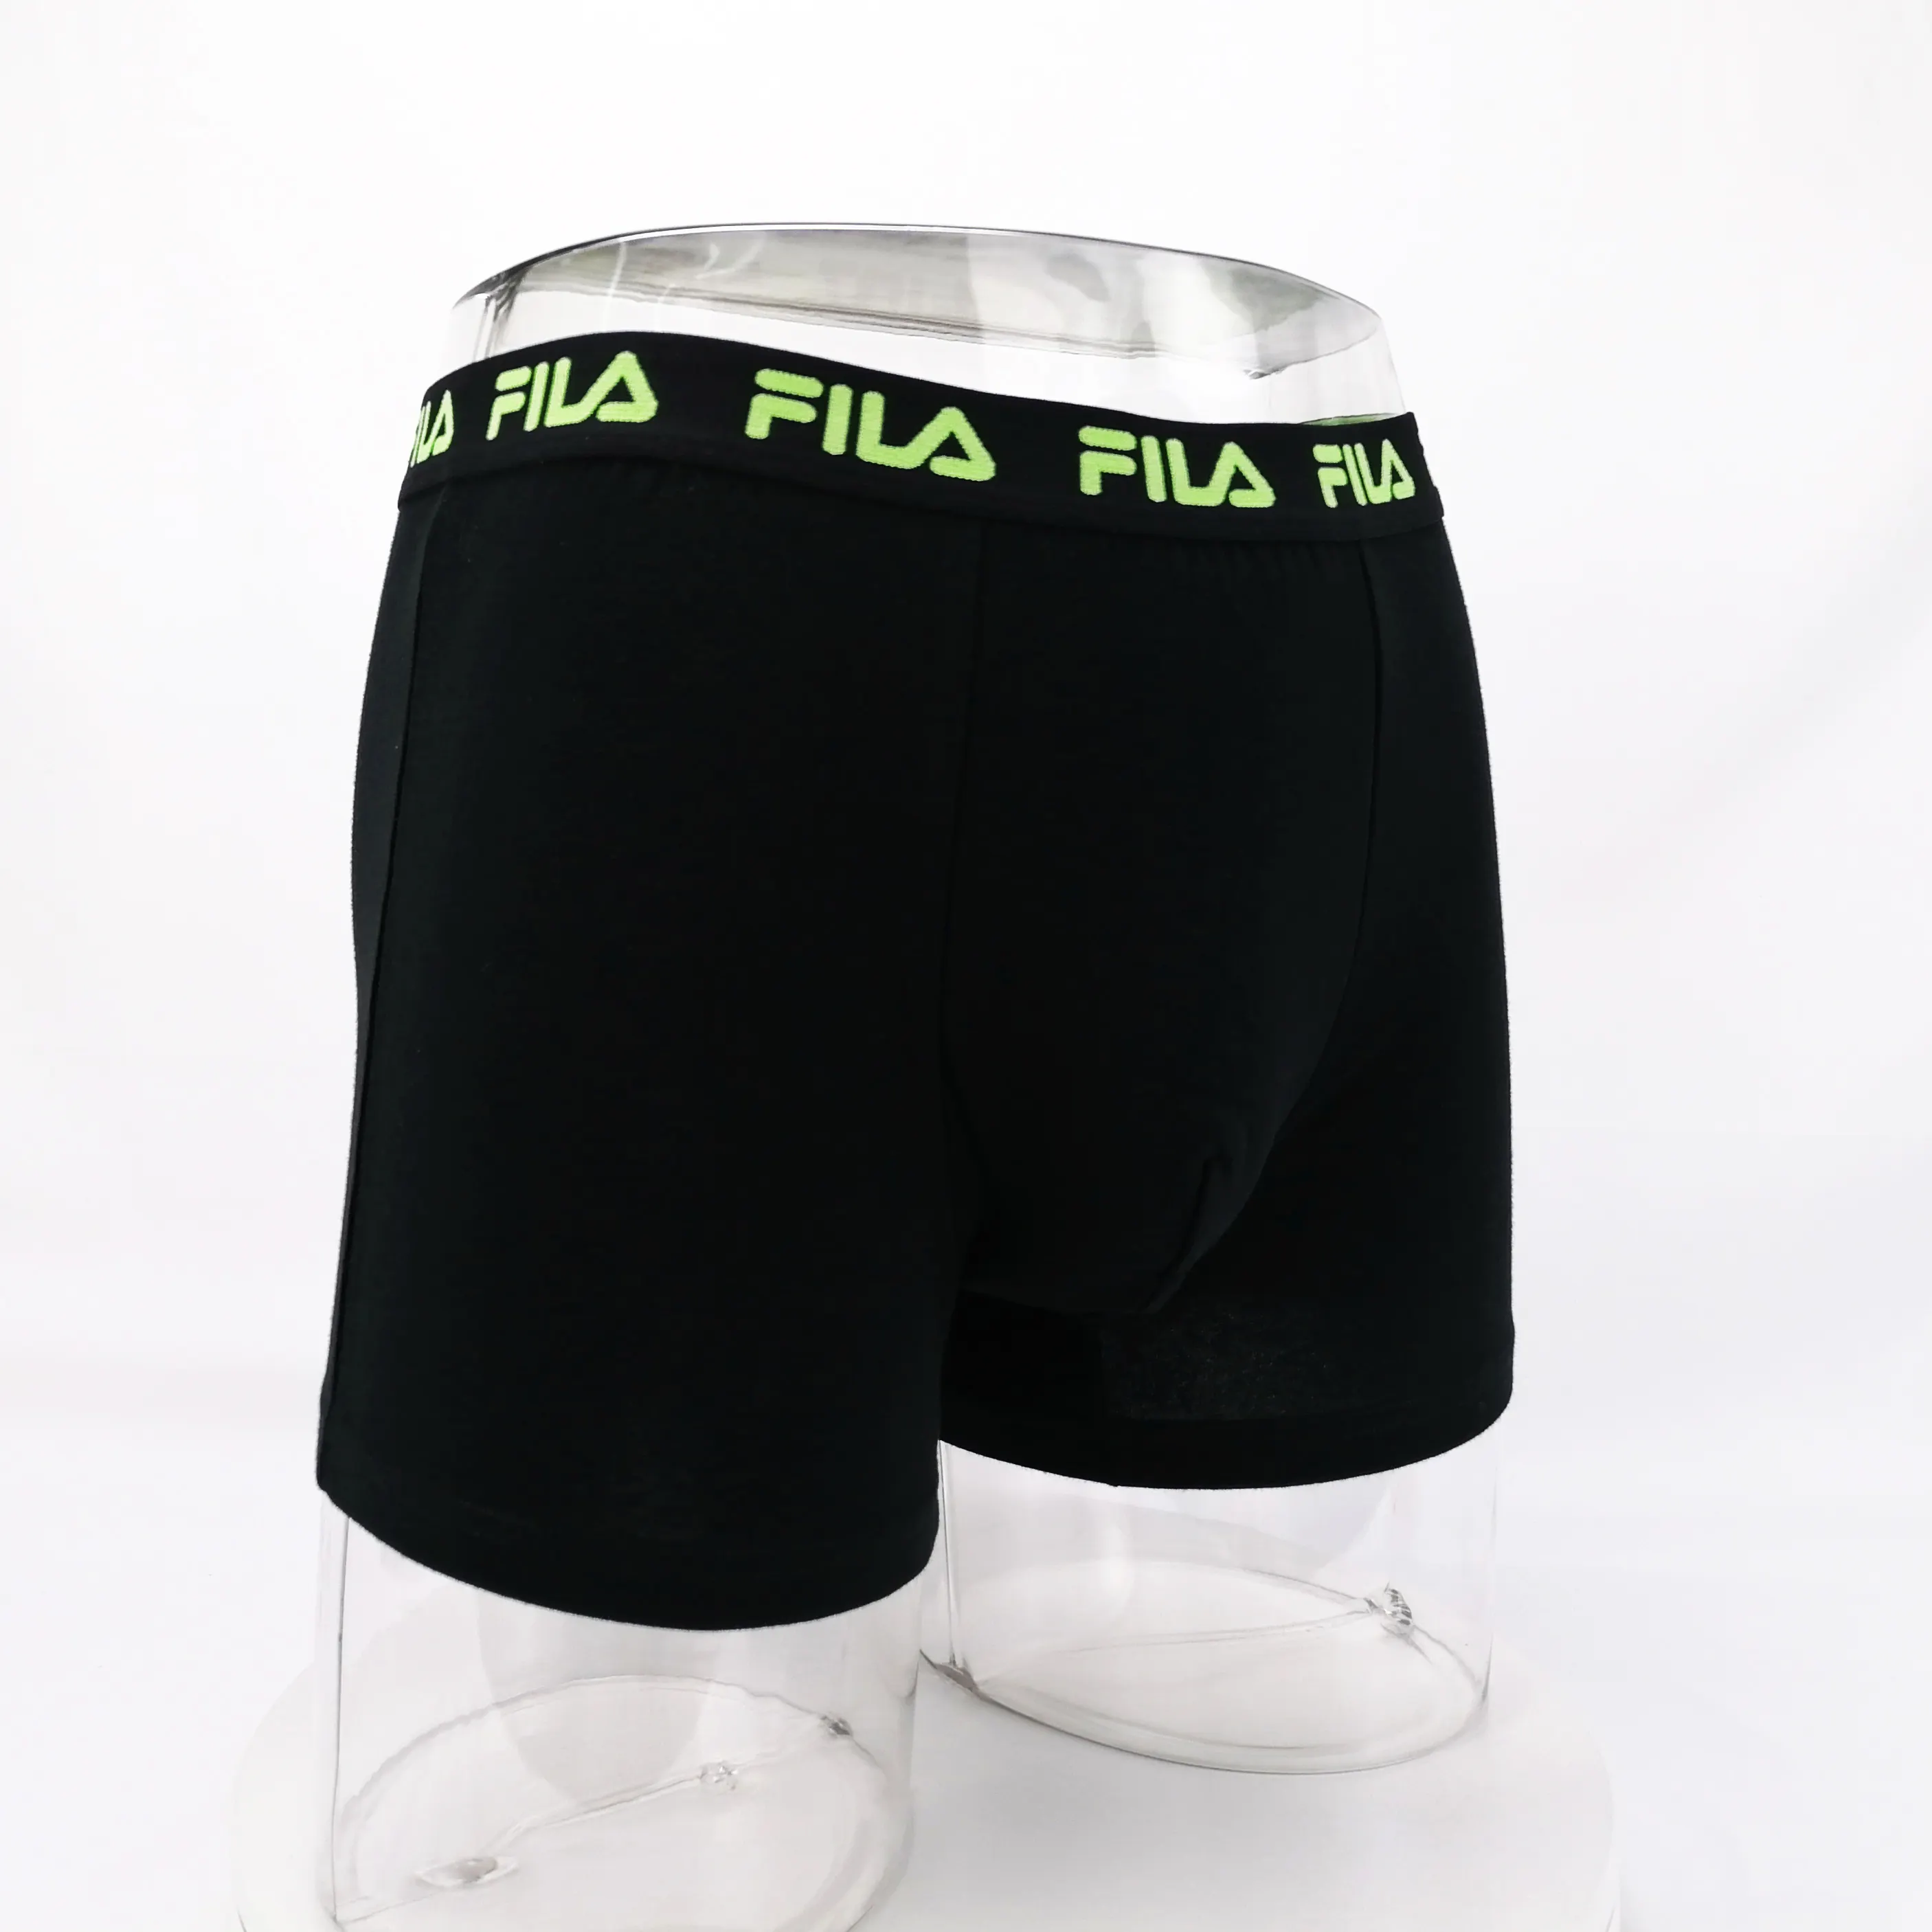 Männer Unterwäsche Boxer Hot Selling Top Marke Solid Soft Cotton Mode Farbe Bund Männer Dessous Shorts